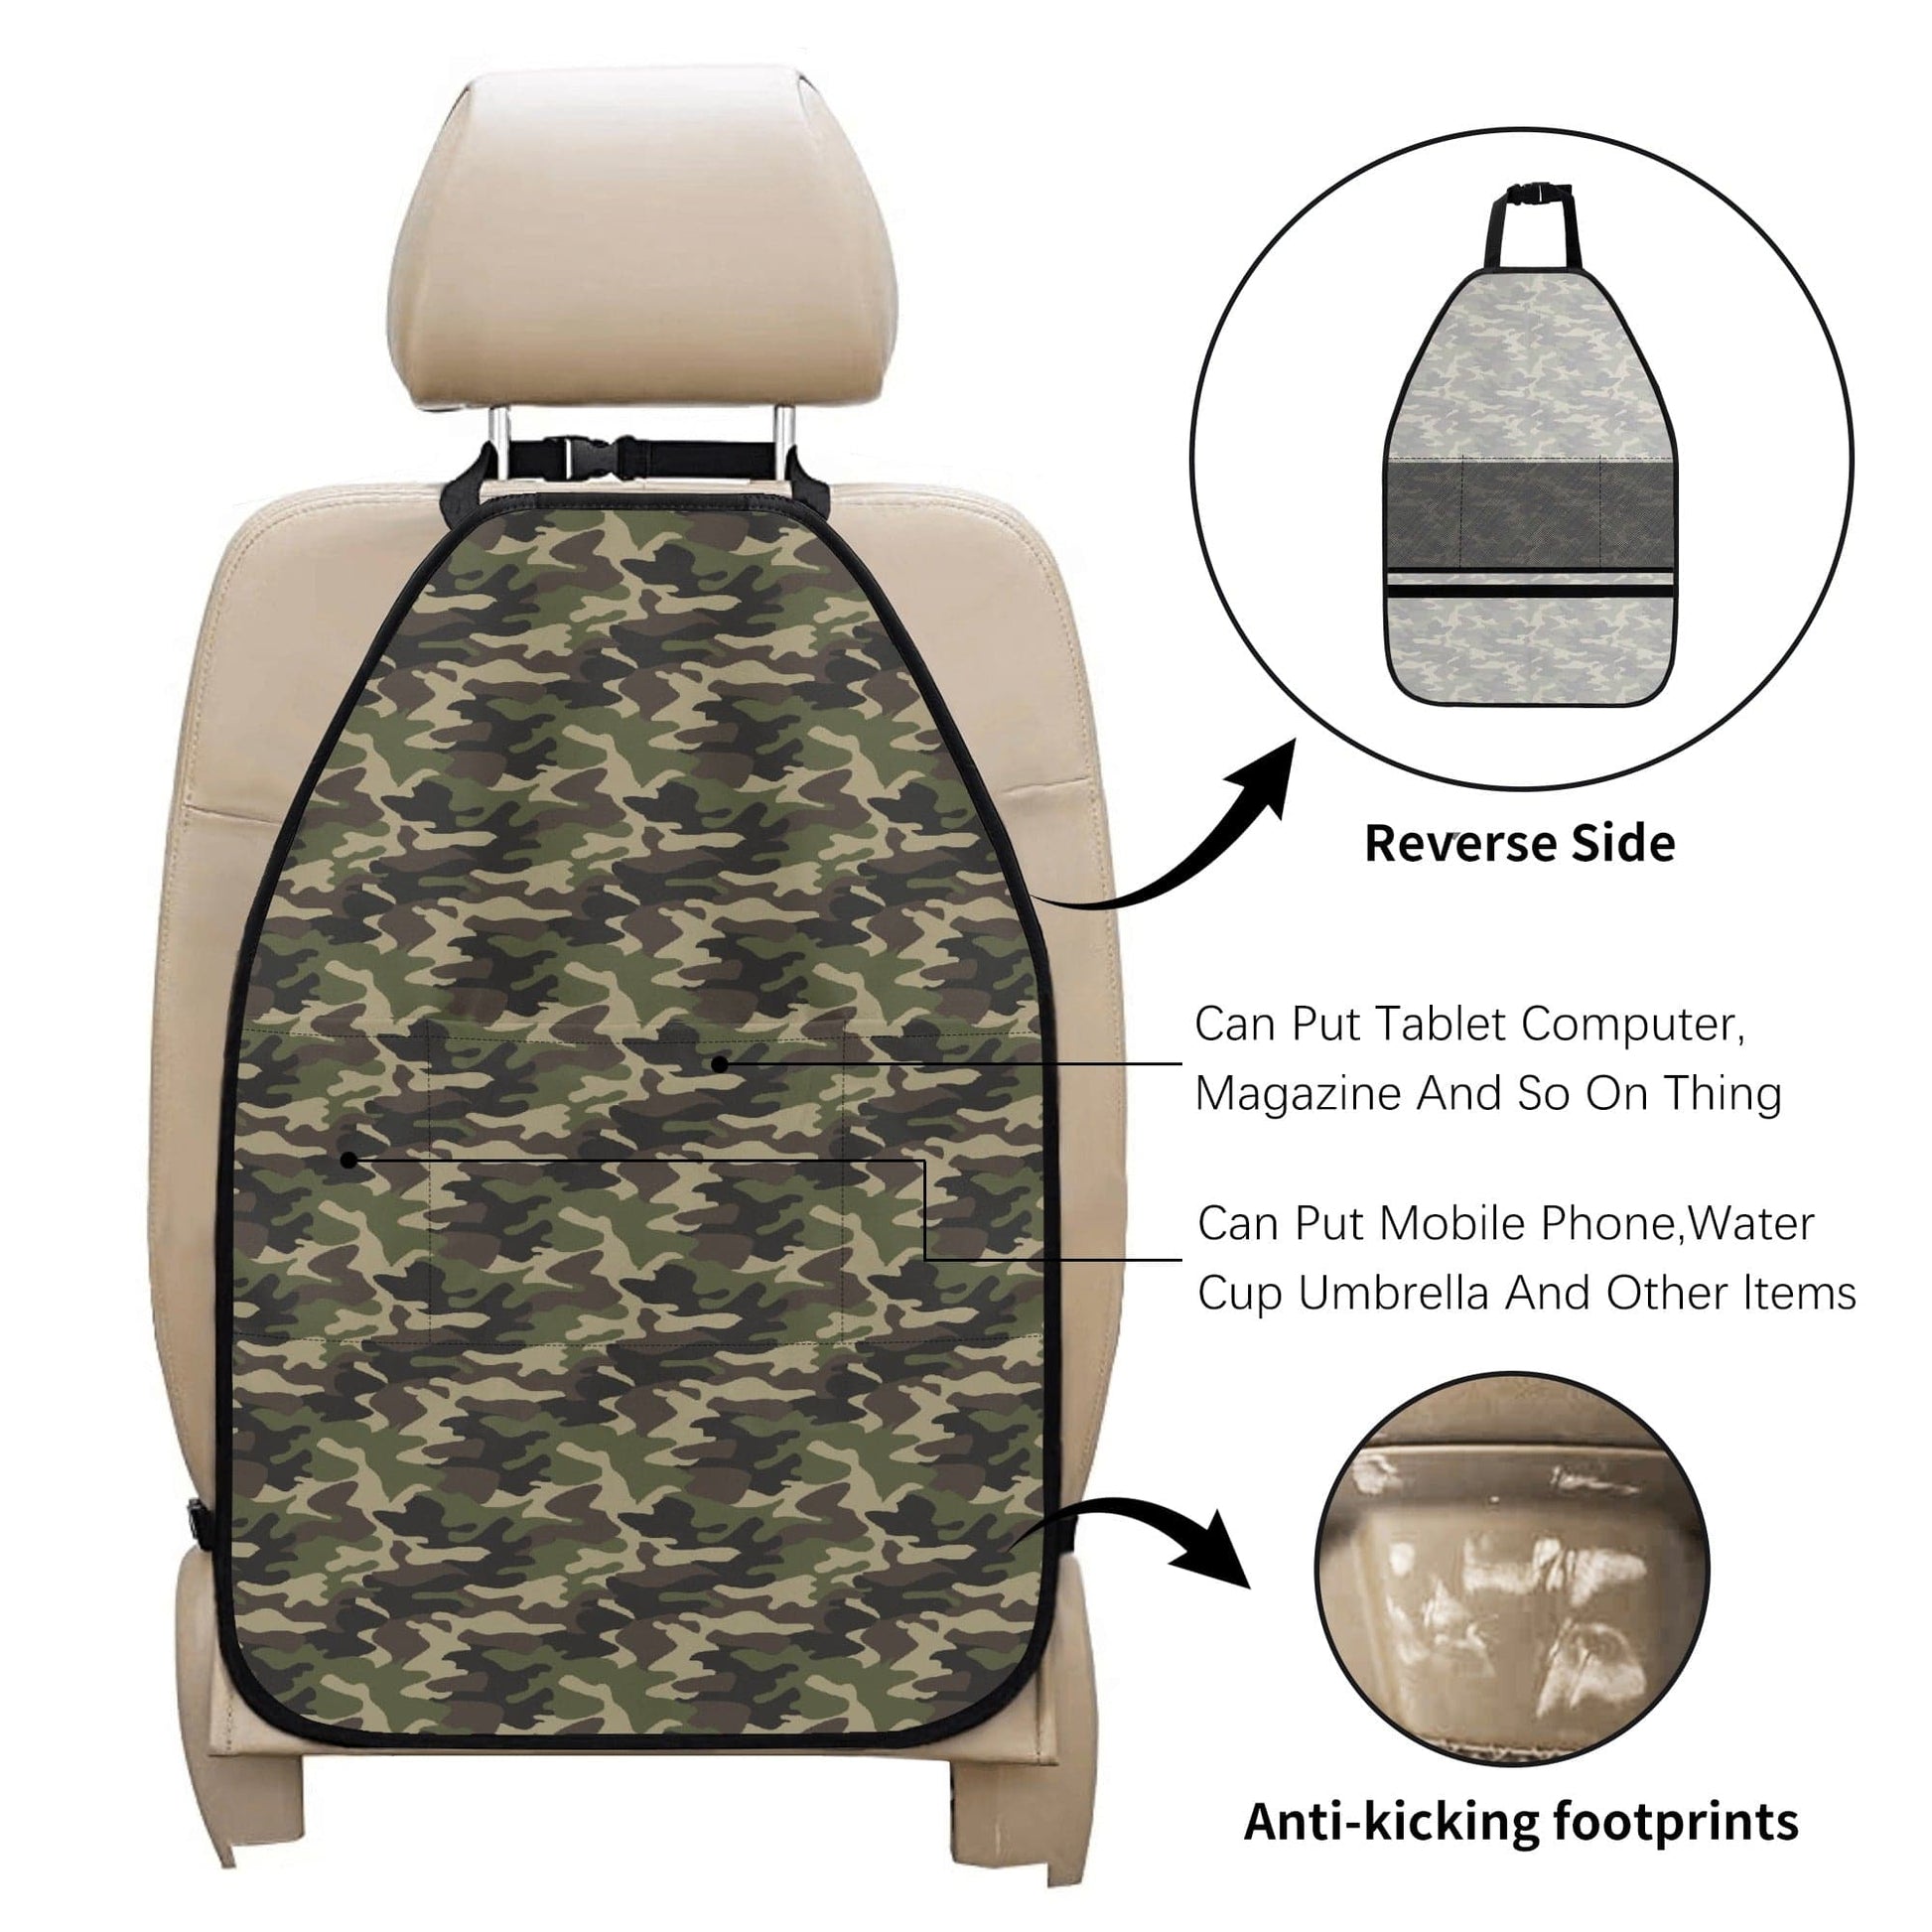 Camouflage Vehicle Back Seat Organizer  popcustoms   